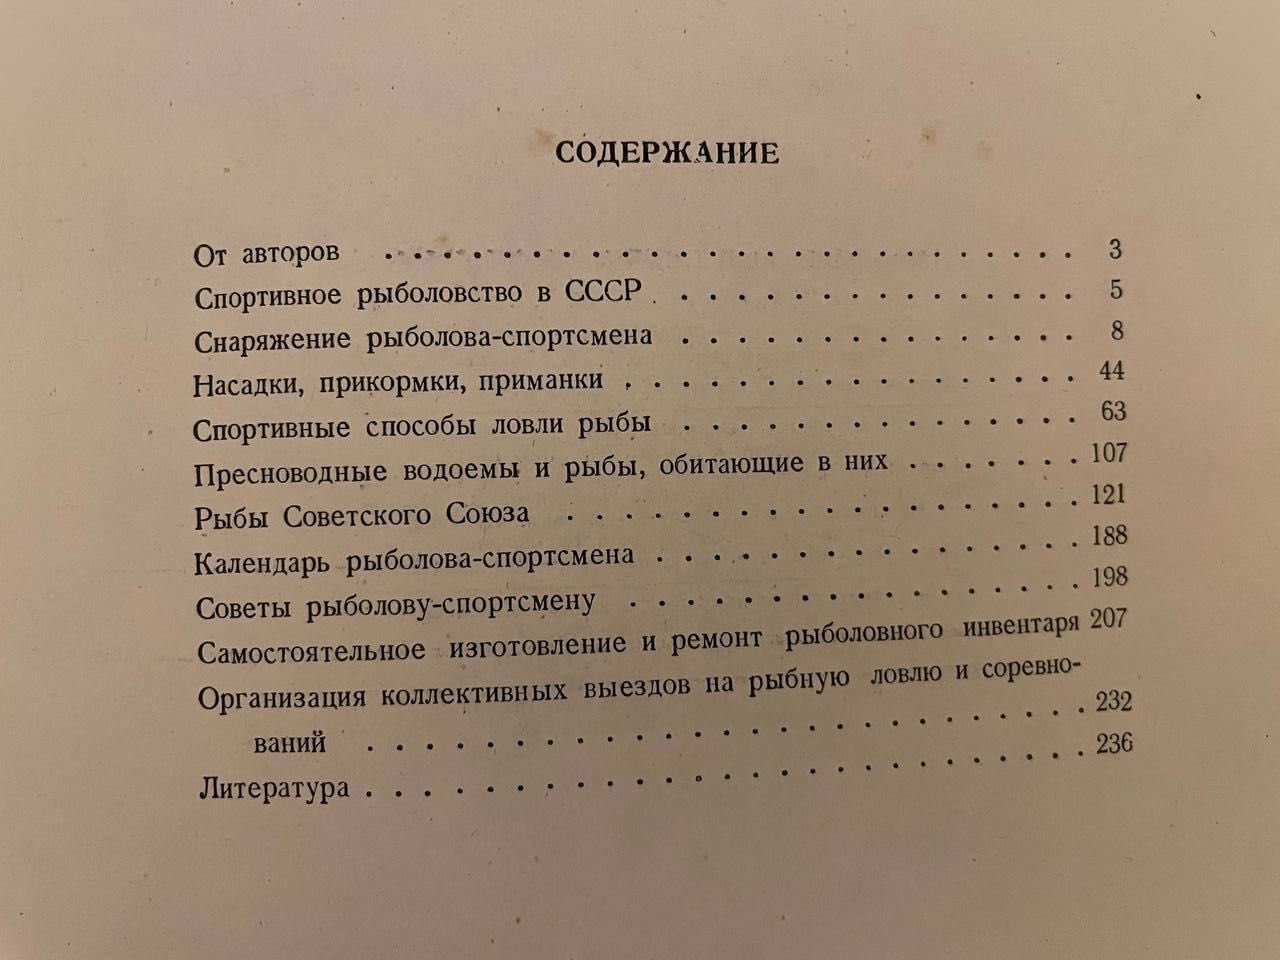 Настольная книга рыболова-спортсмена. 1960 г.